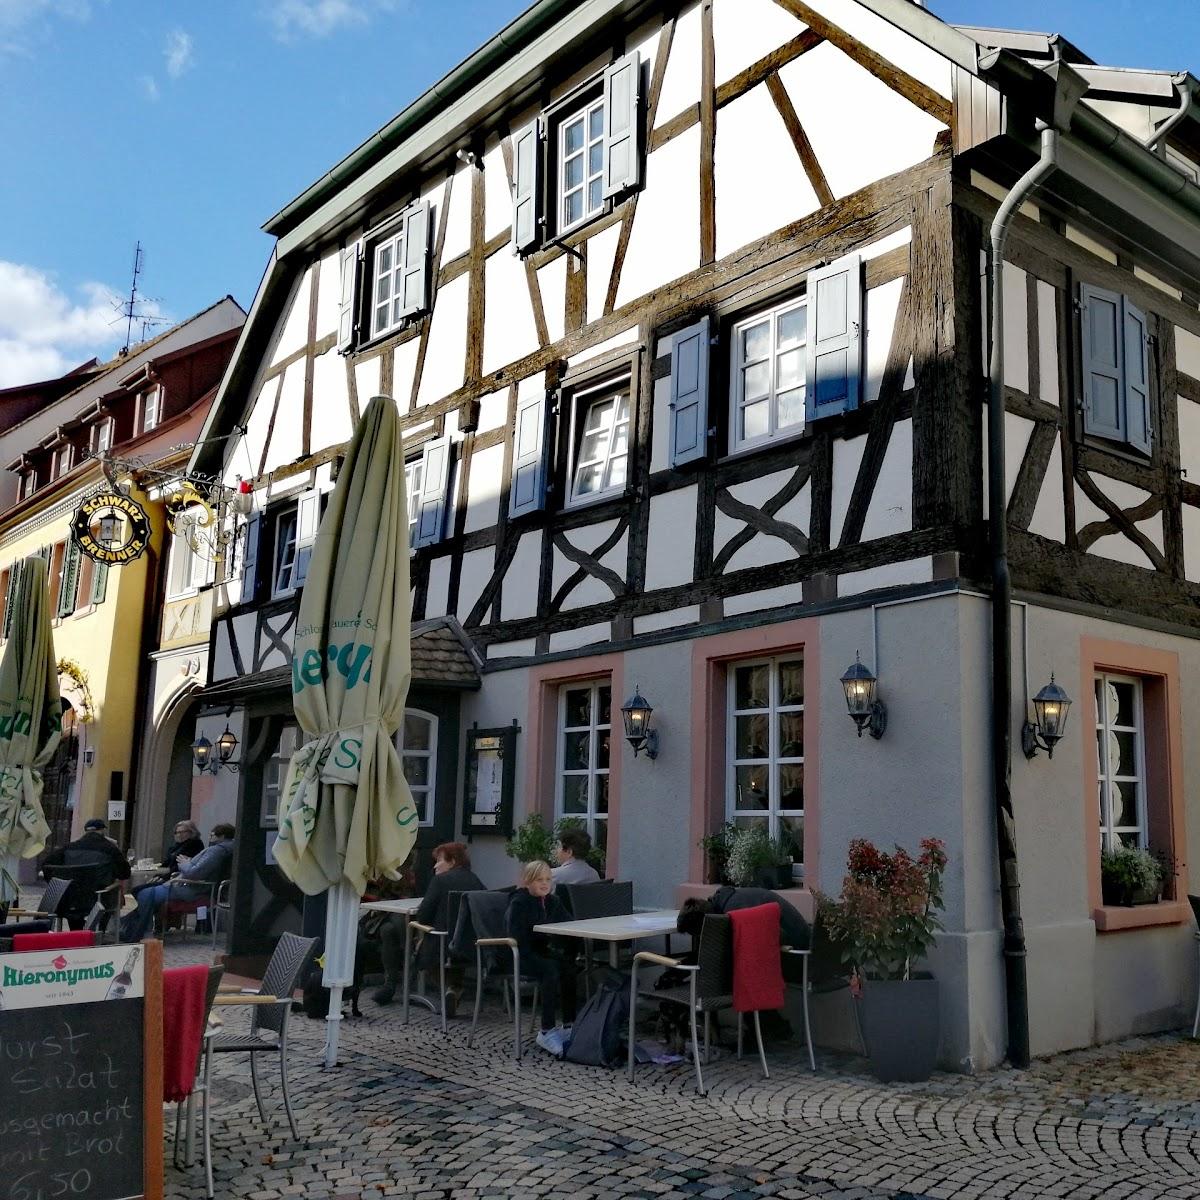 Restaurant "Schwarzbrenner" in Endingen am Kaiserstuhl